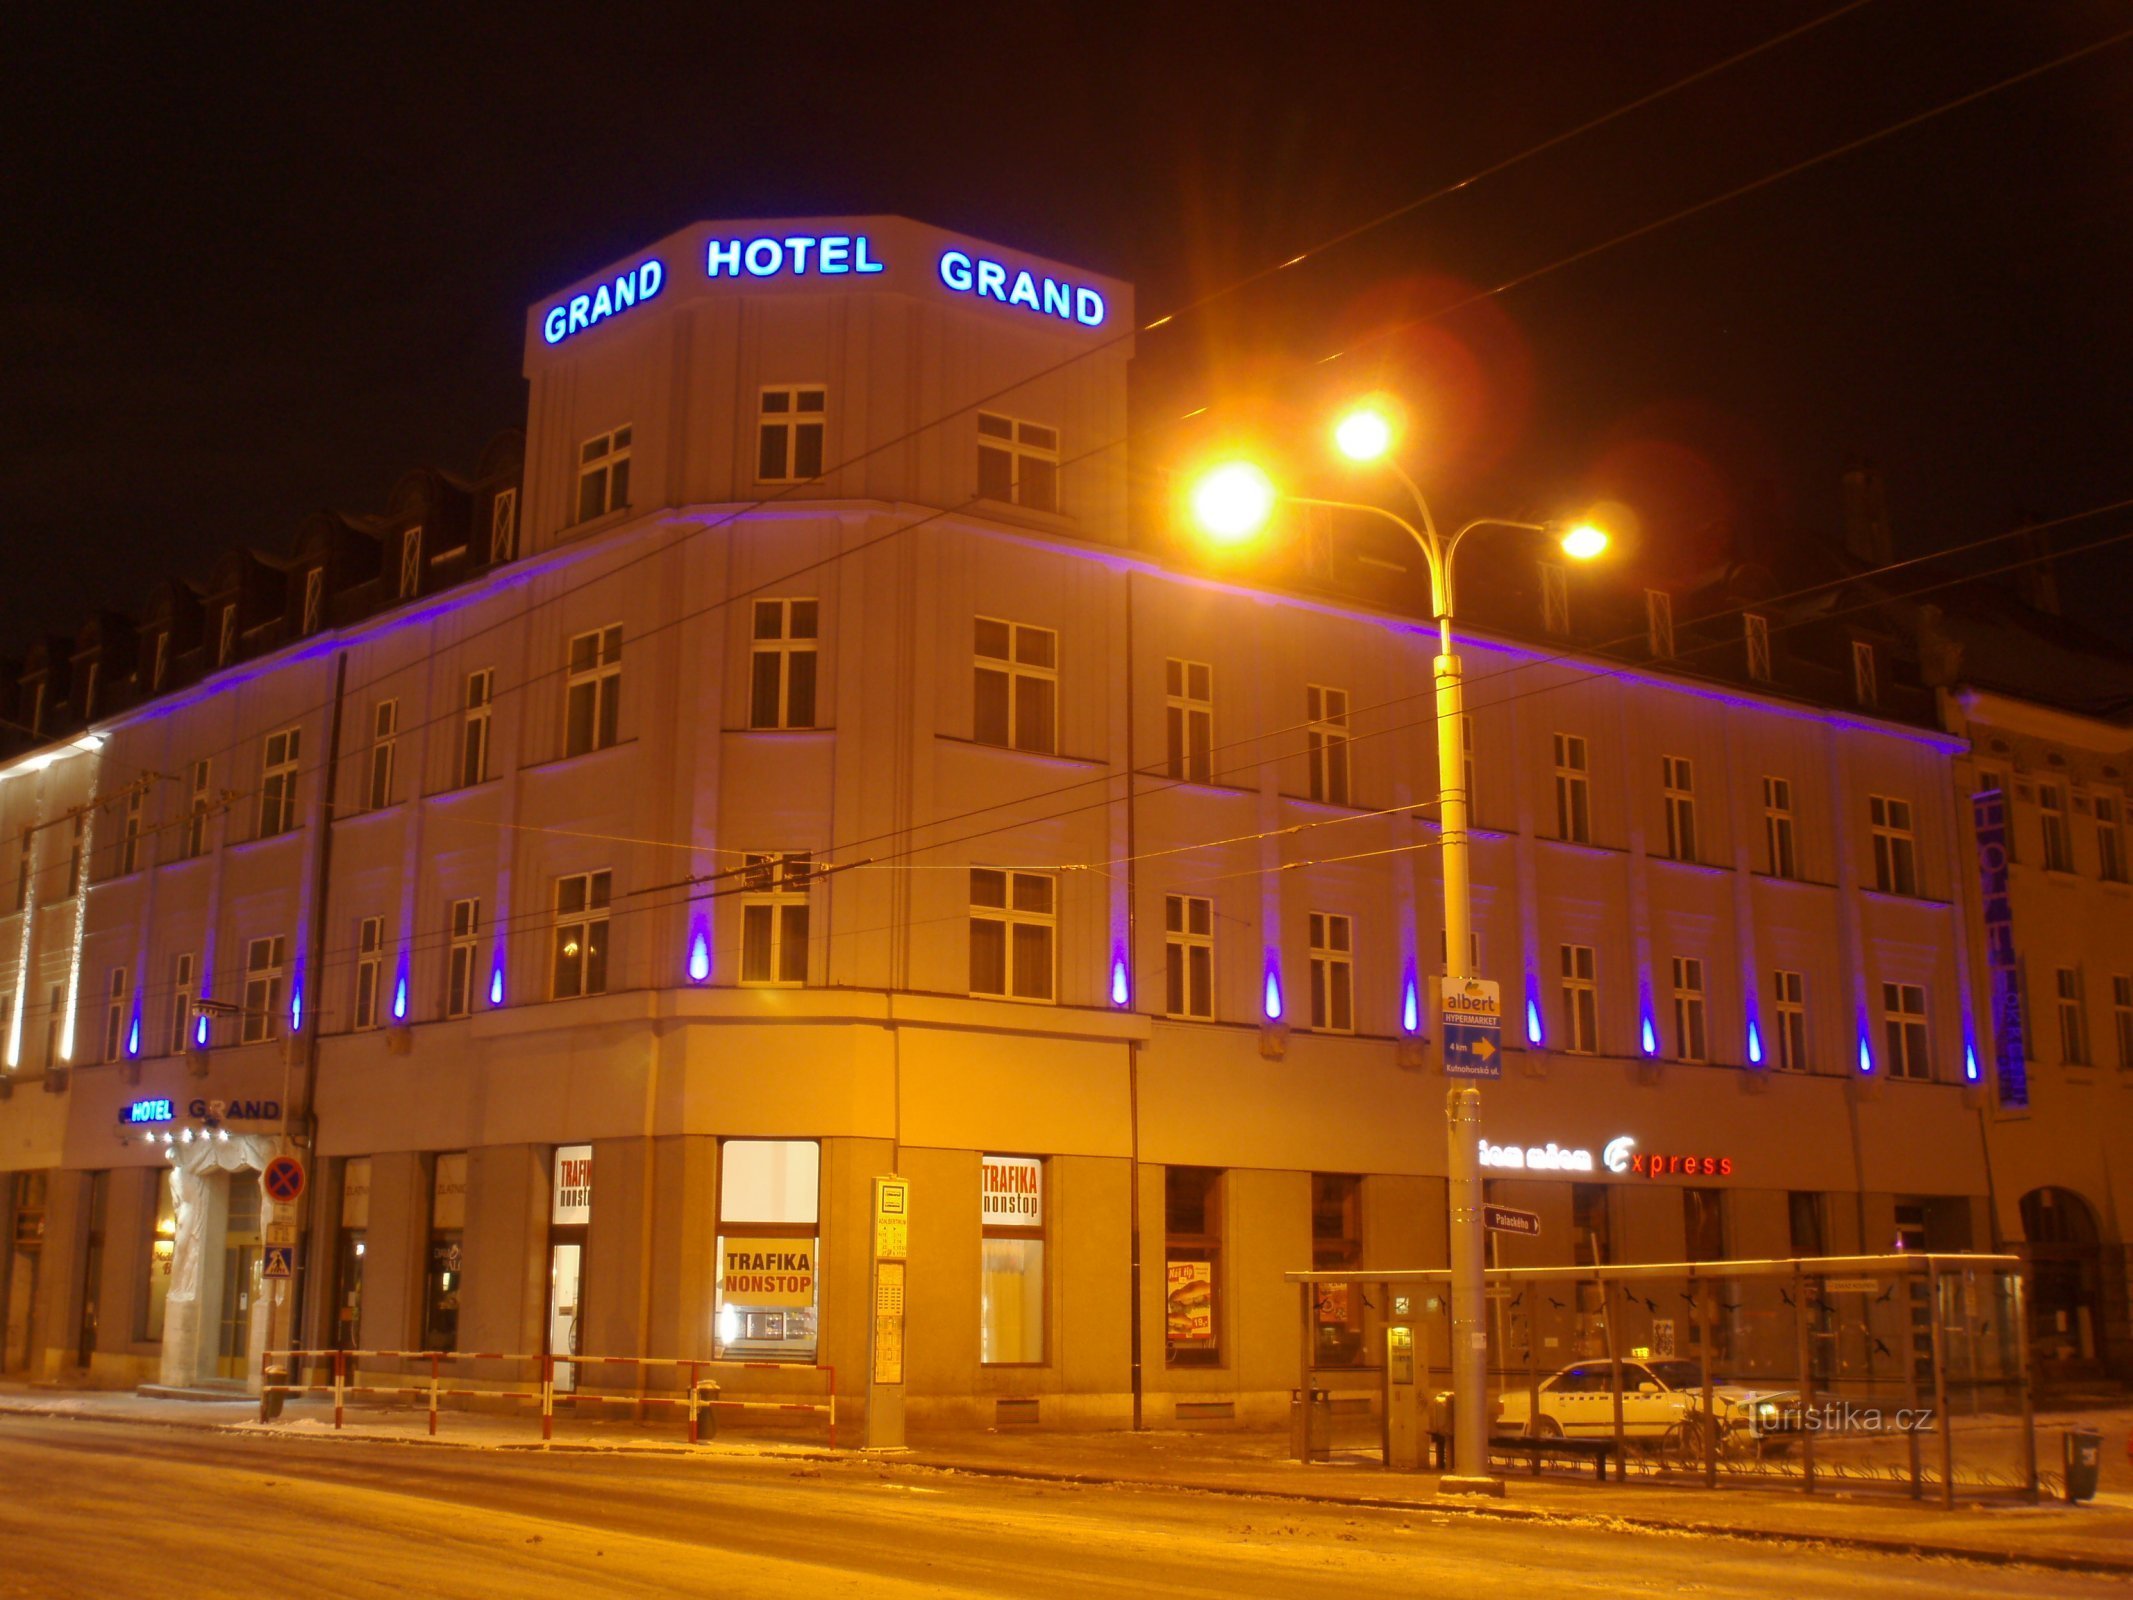 Grandhotel Urban (Hradec Králové, 26.12.2010. XNUMX. XNUMX)